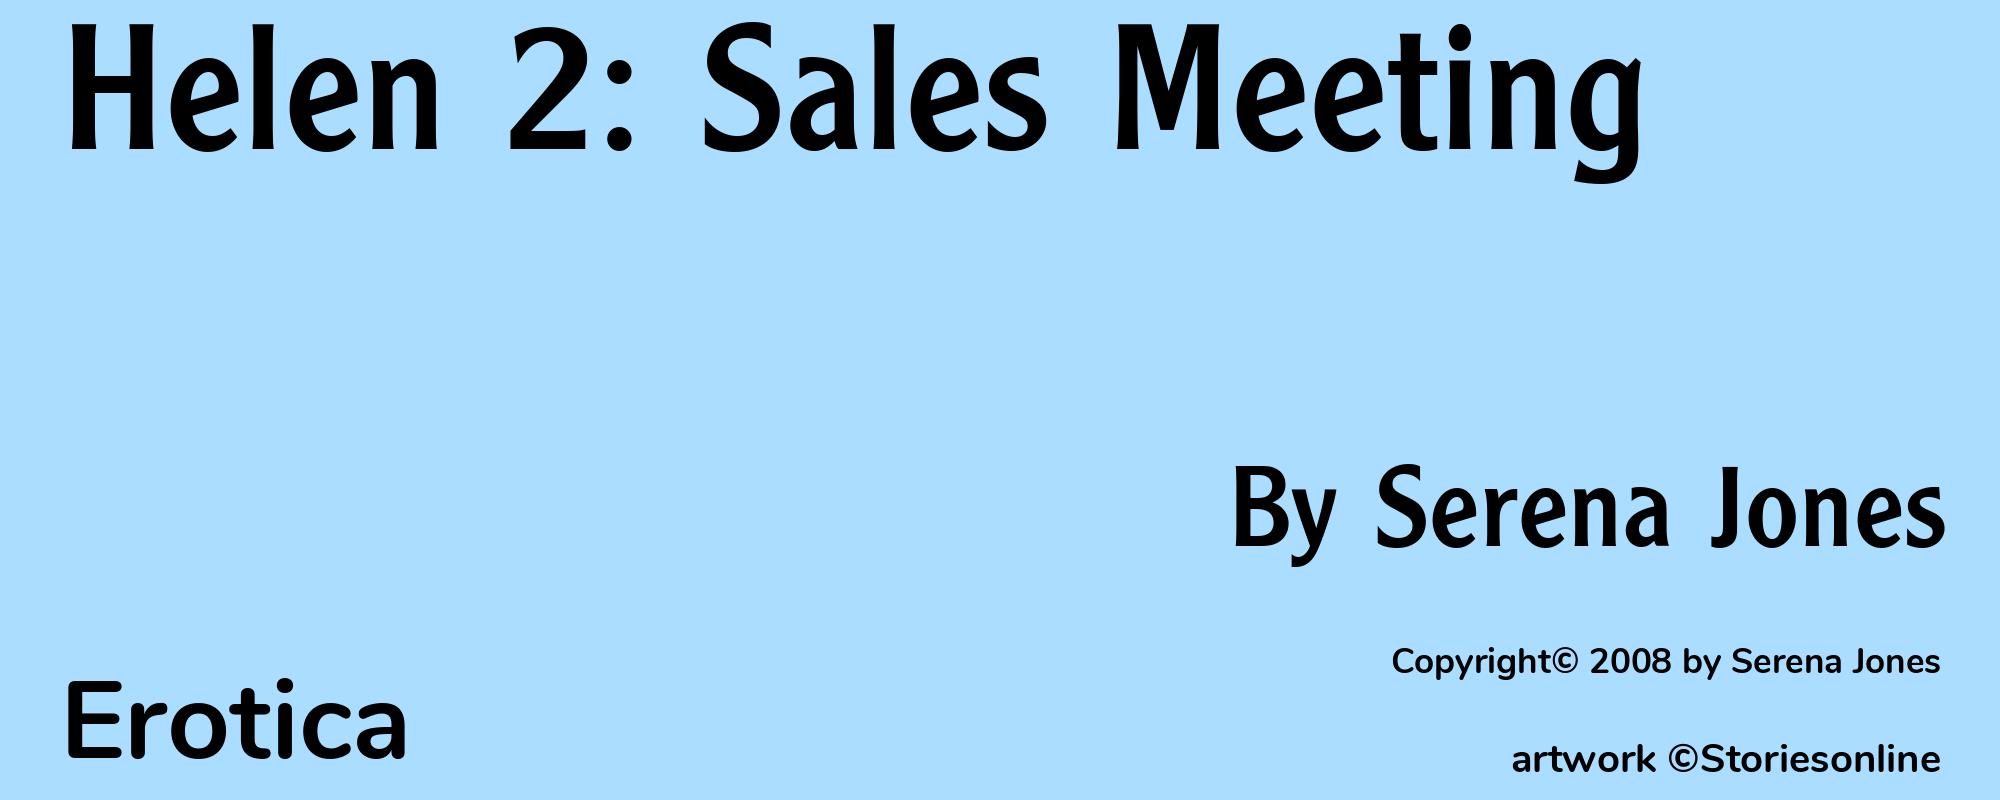 Helen 2: Sales Meeting - Cover